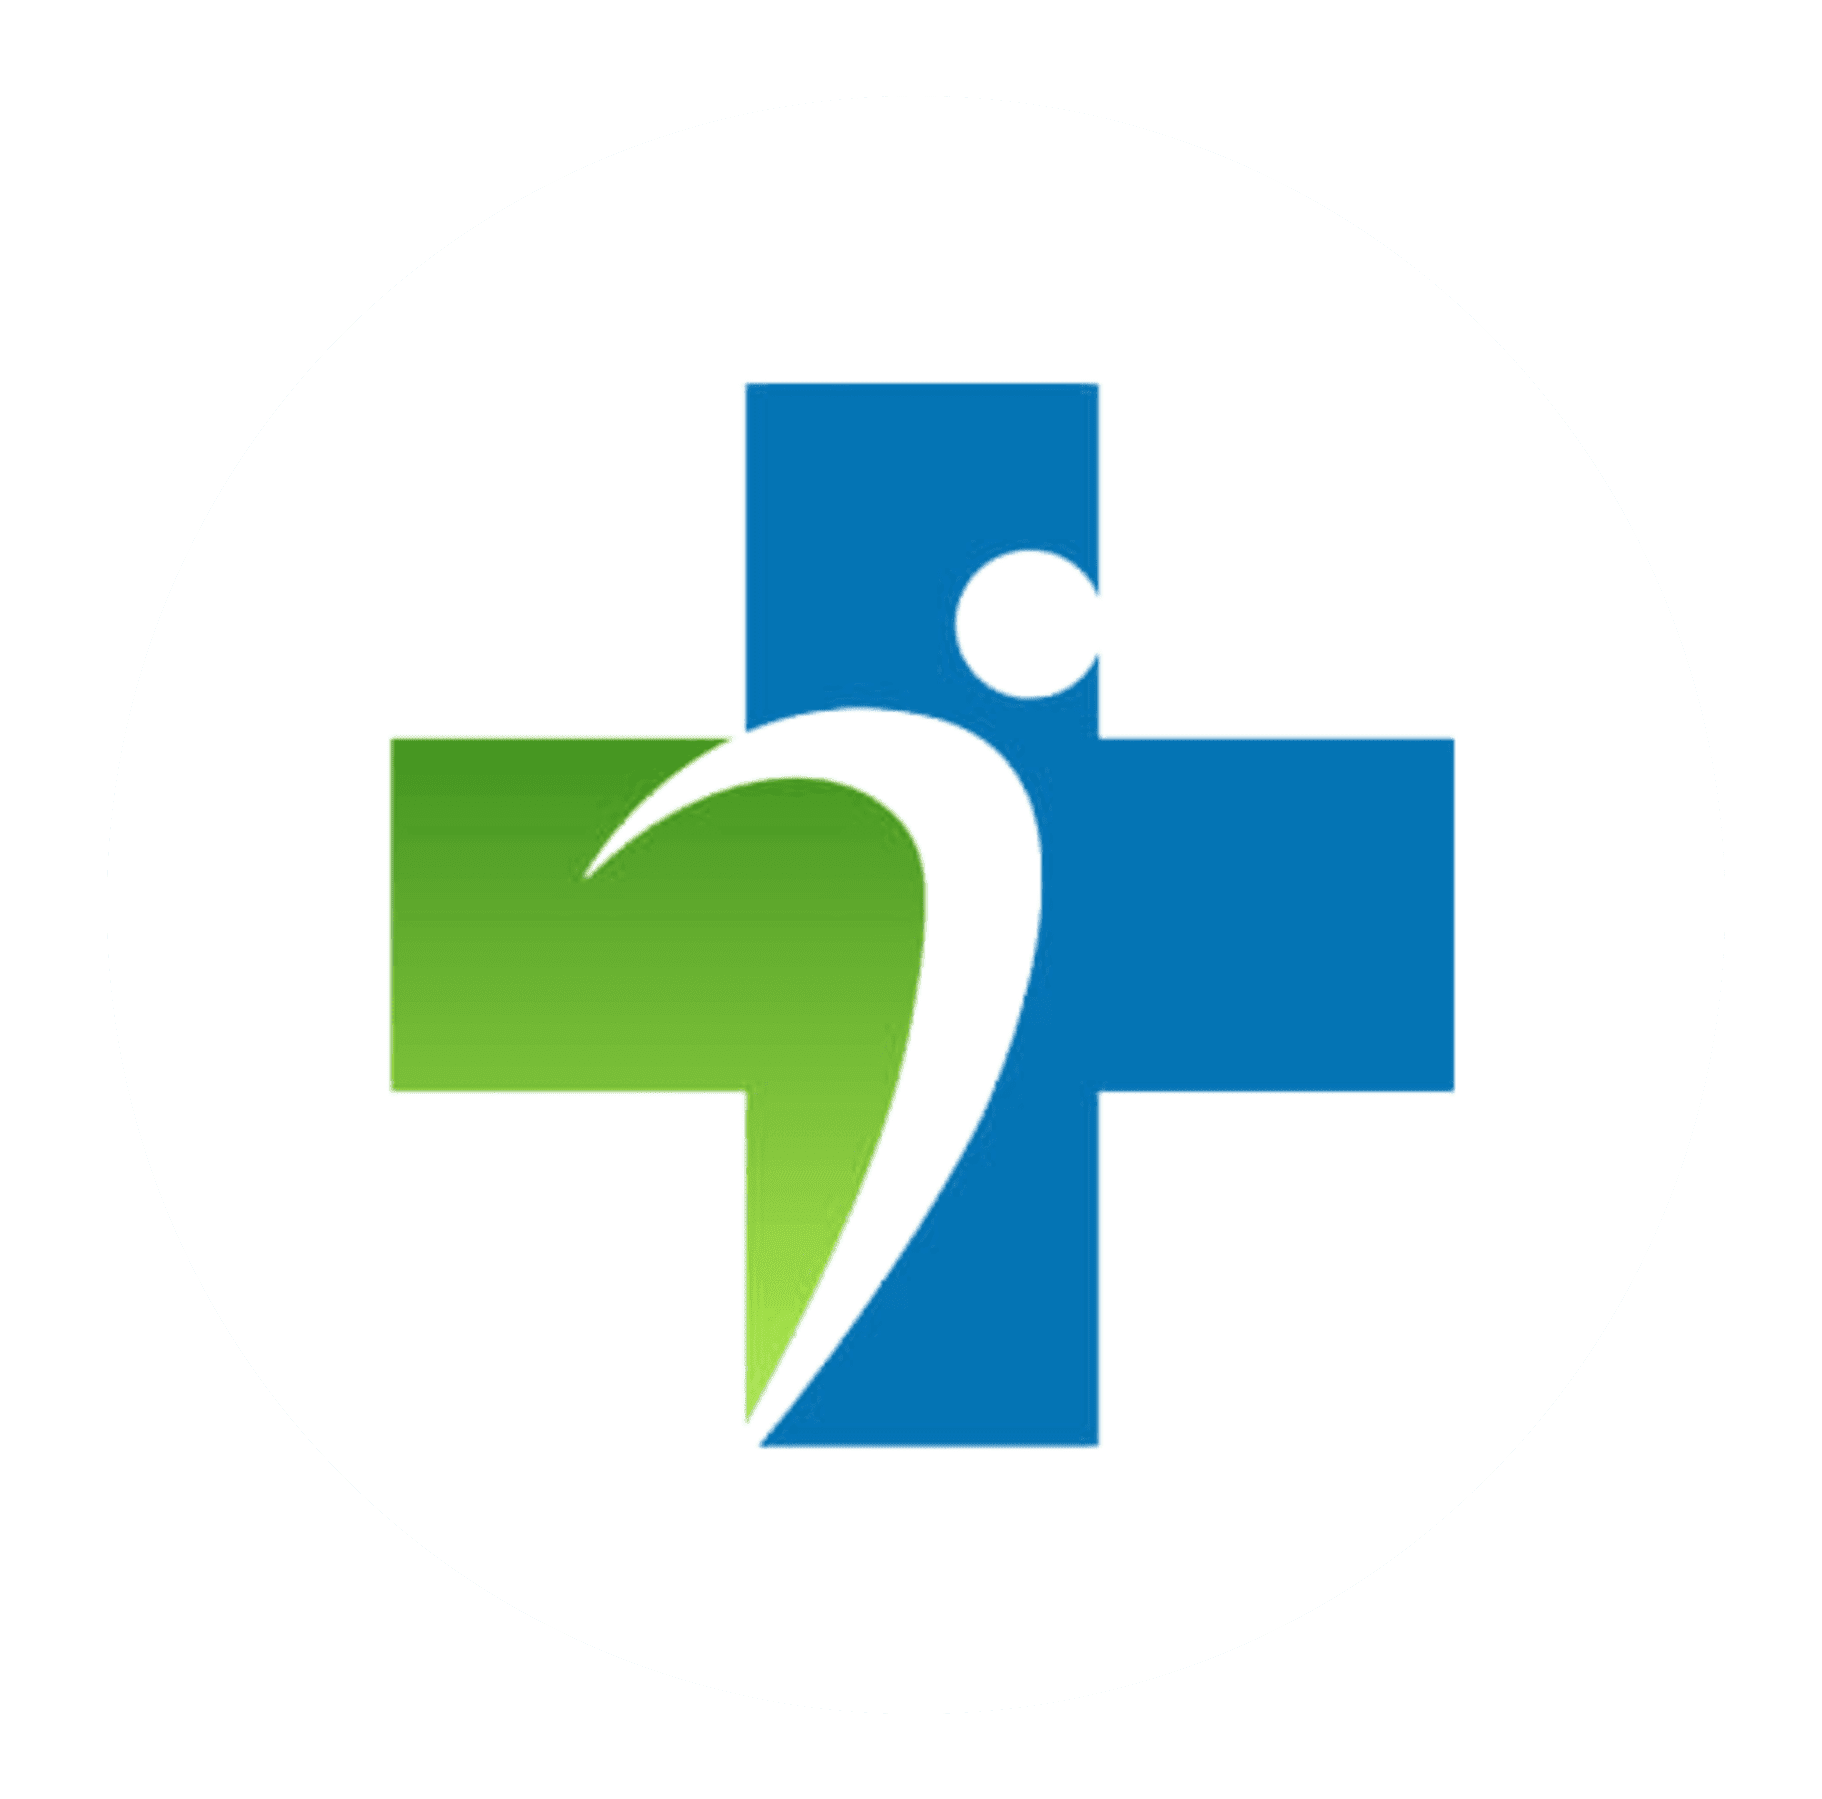 Patient-Centered Health